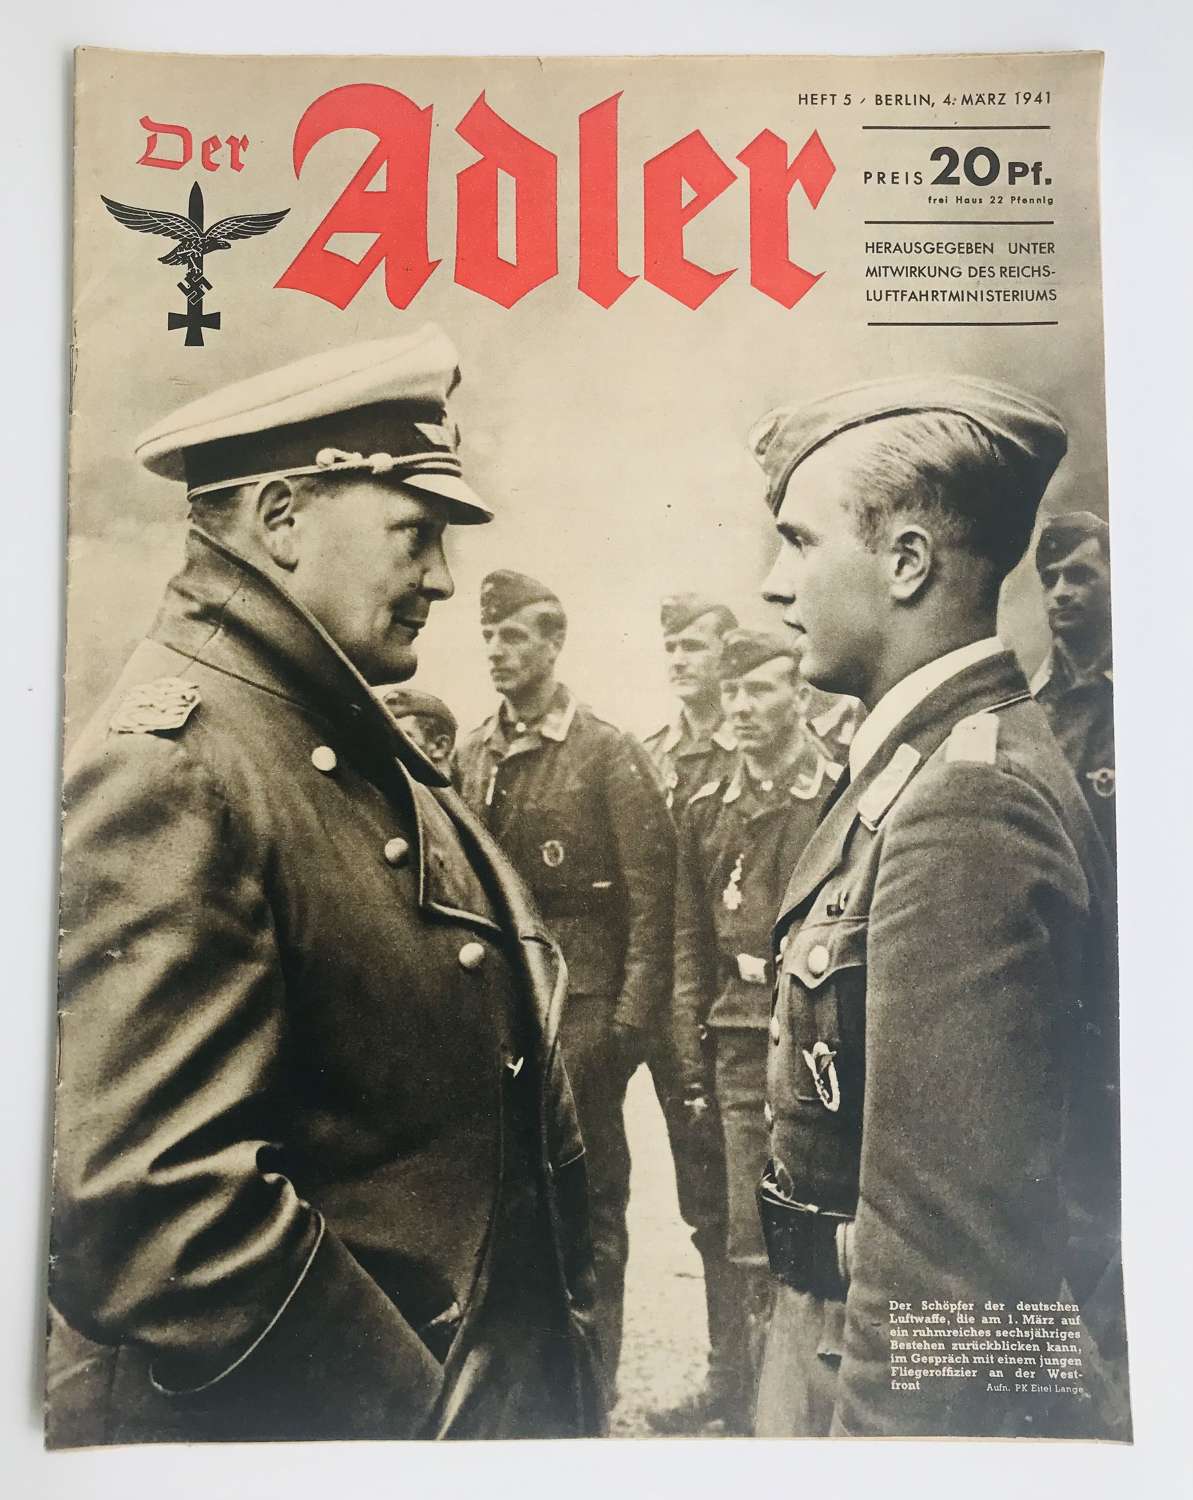 A copy of the Luftwaffe magazine (Alder)